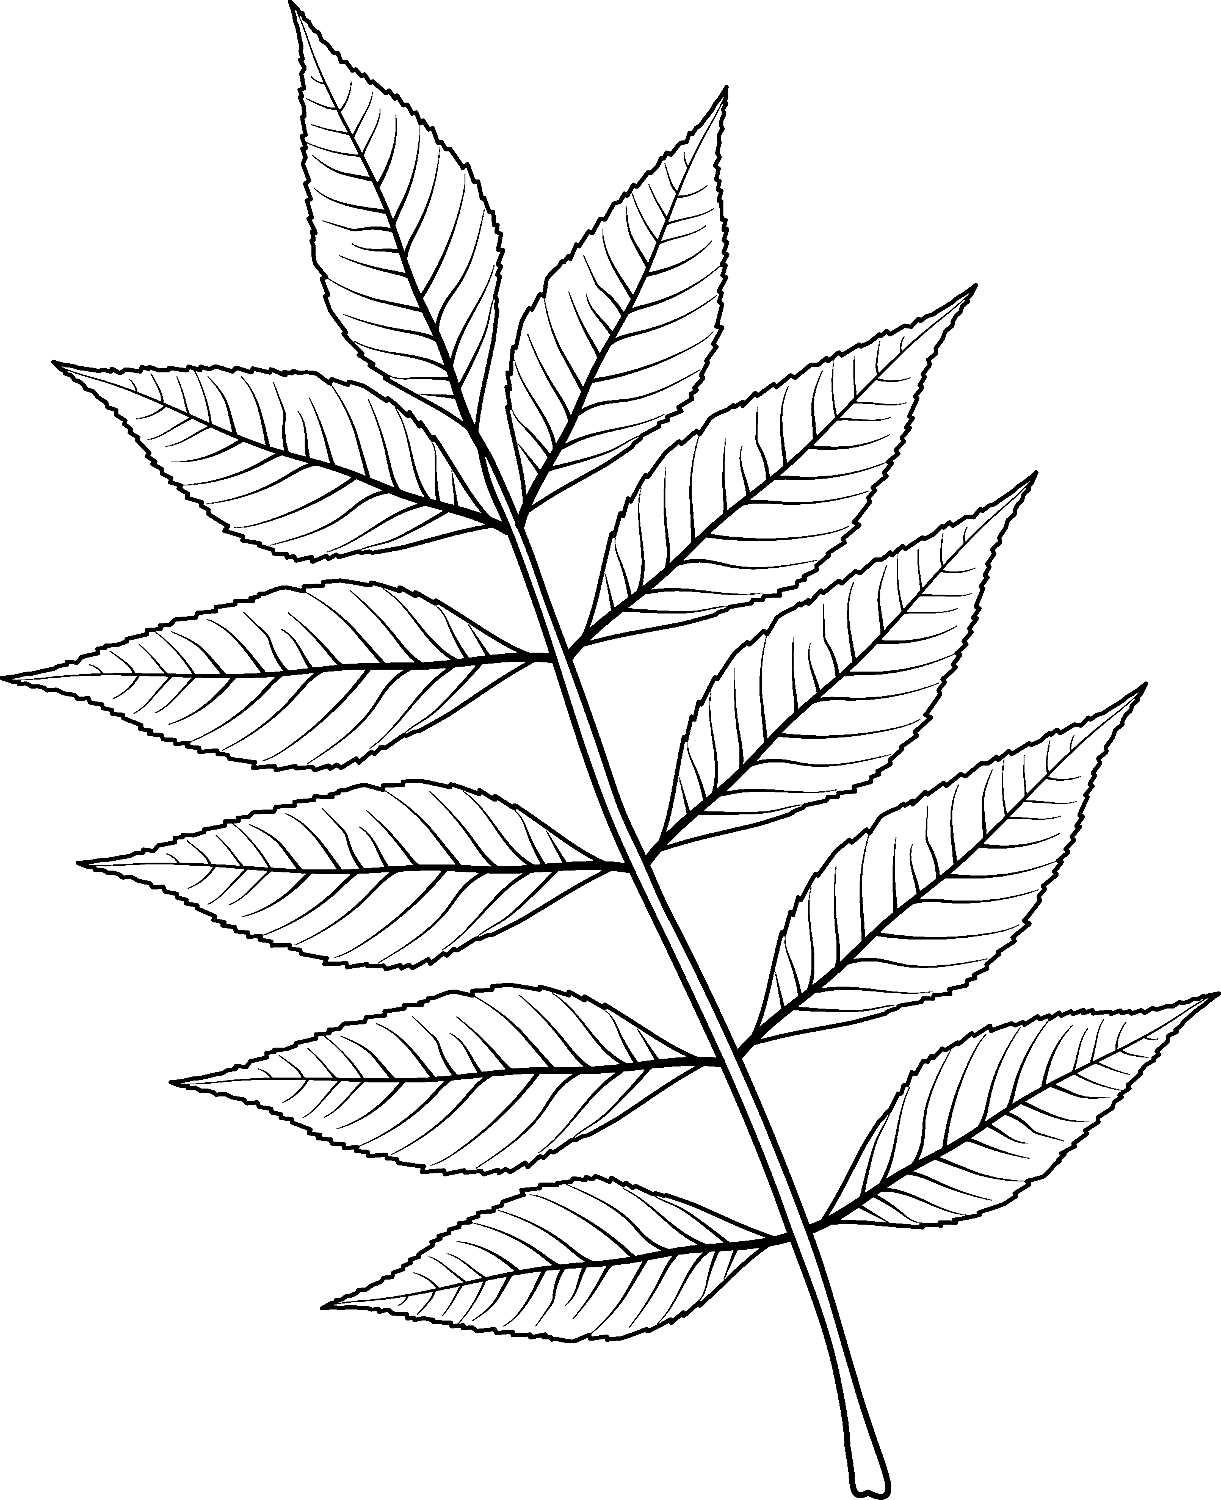 Europees Asblad van Leaf